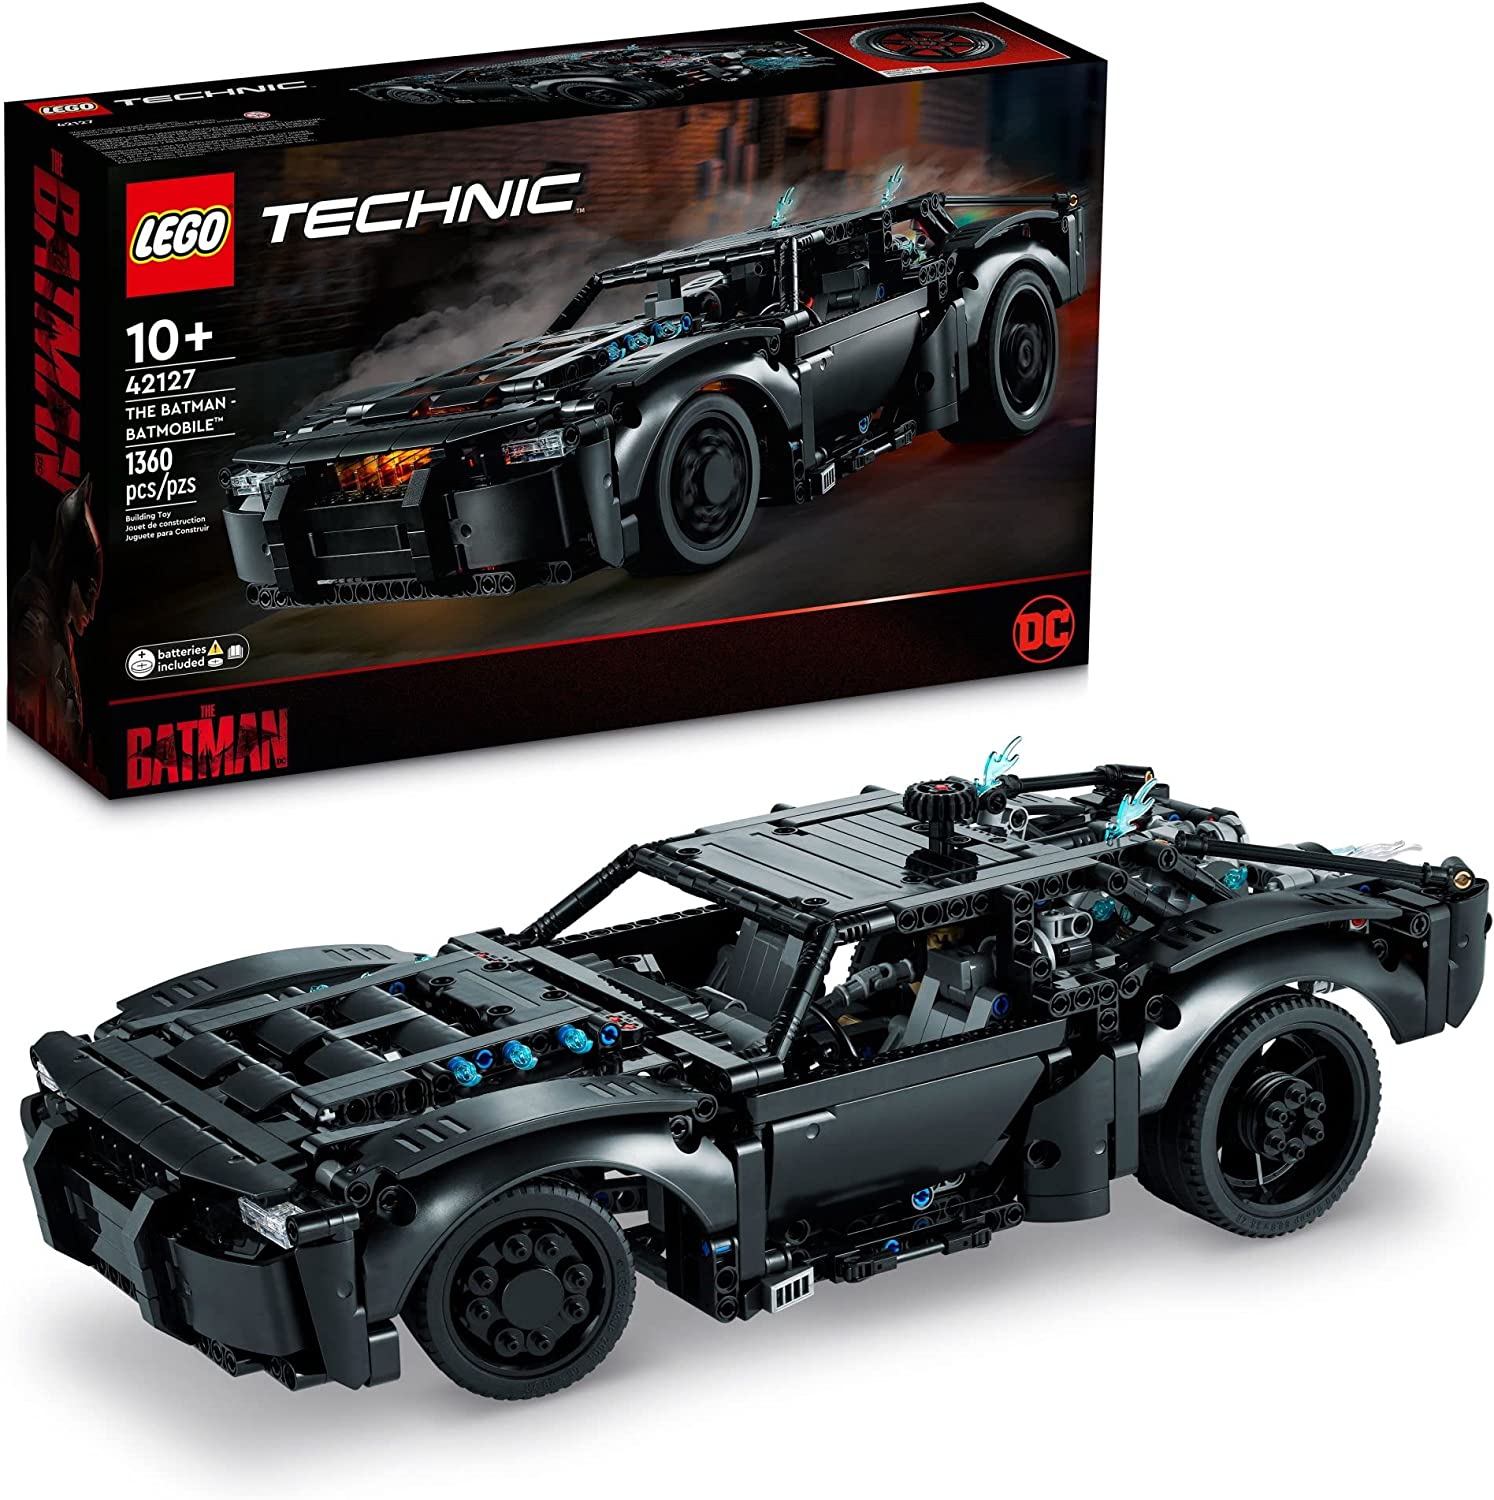 LEGO Technic The Batman Batmobile Building Set $79.99 + Free Shipping @ Amazon & Macy's